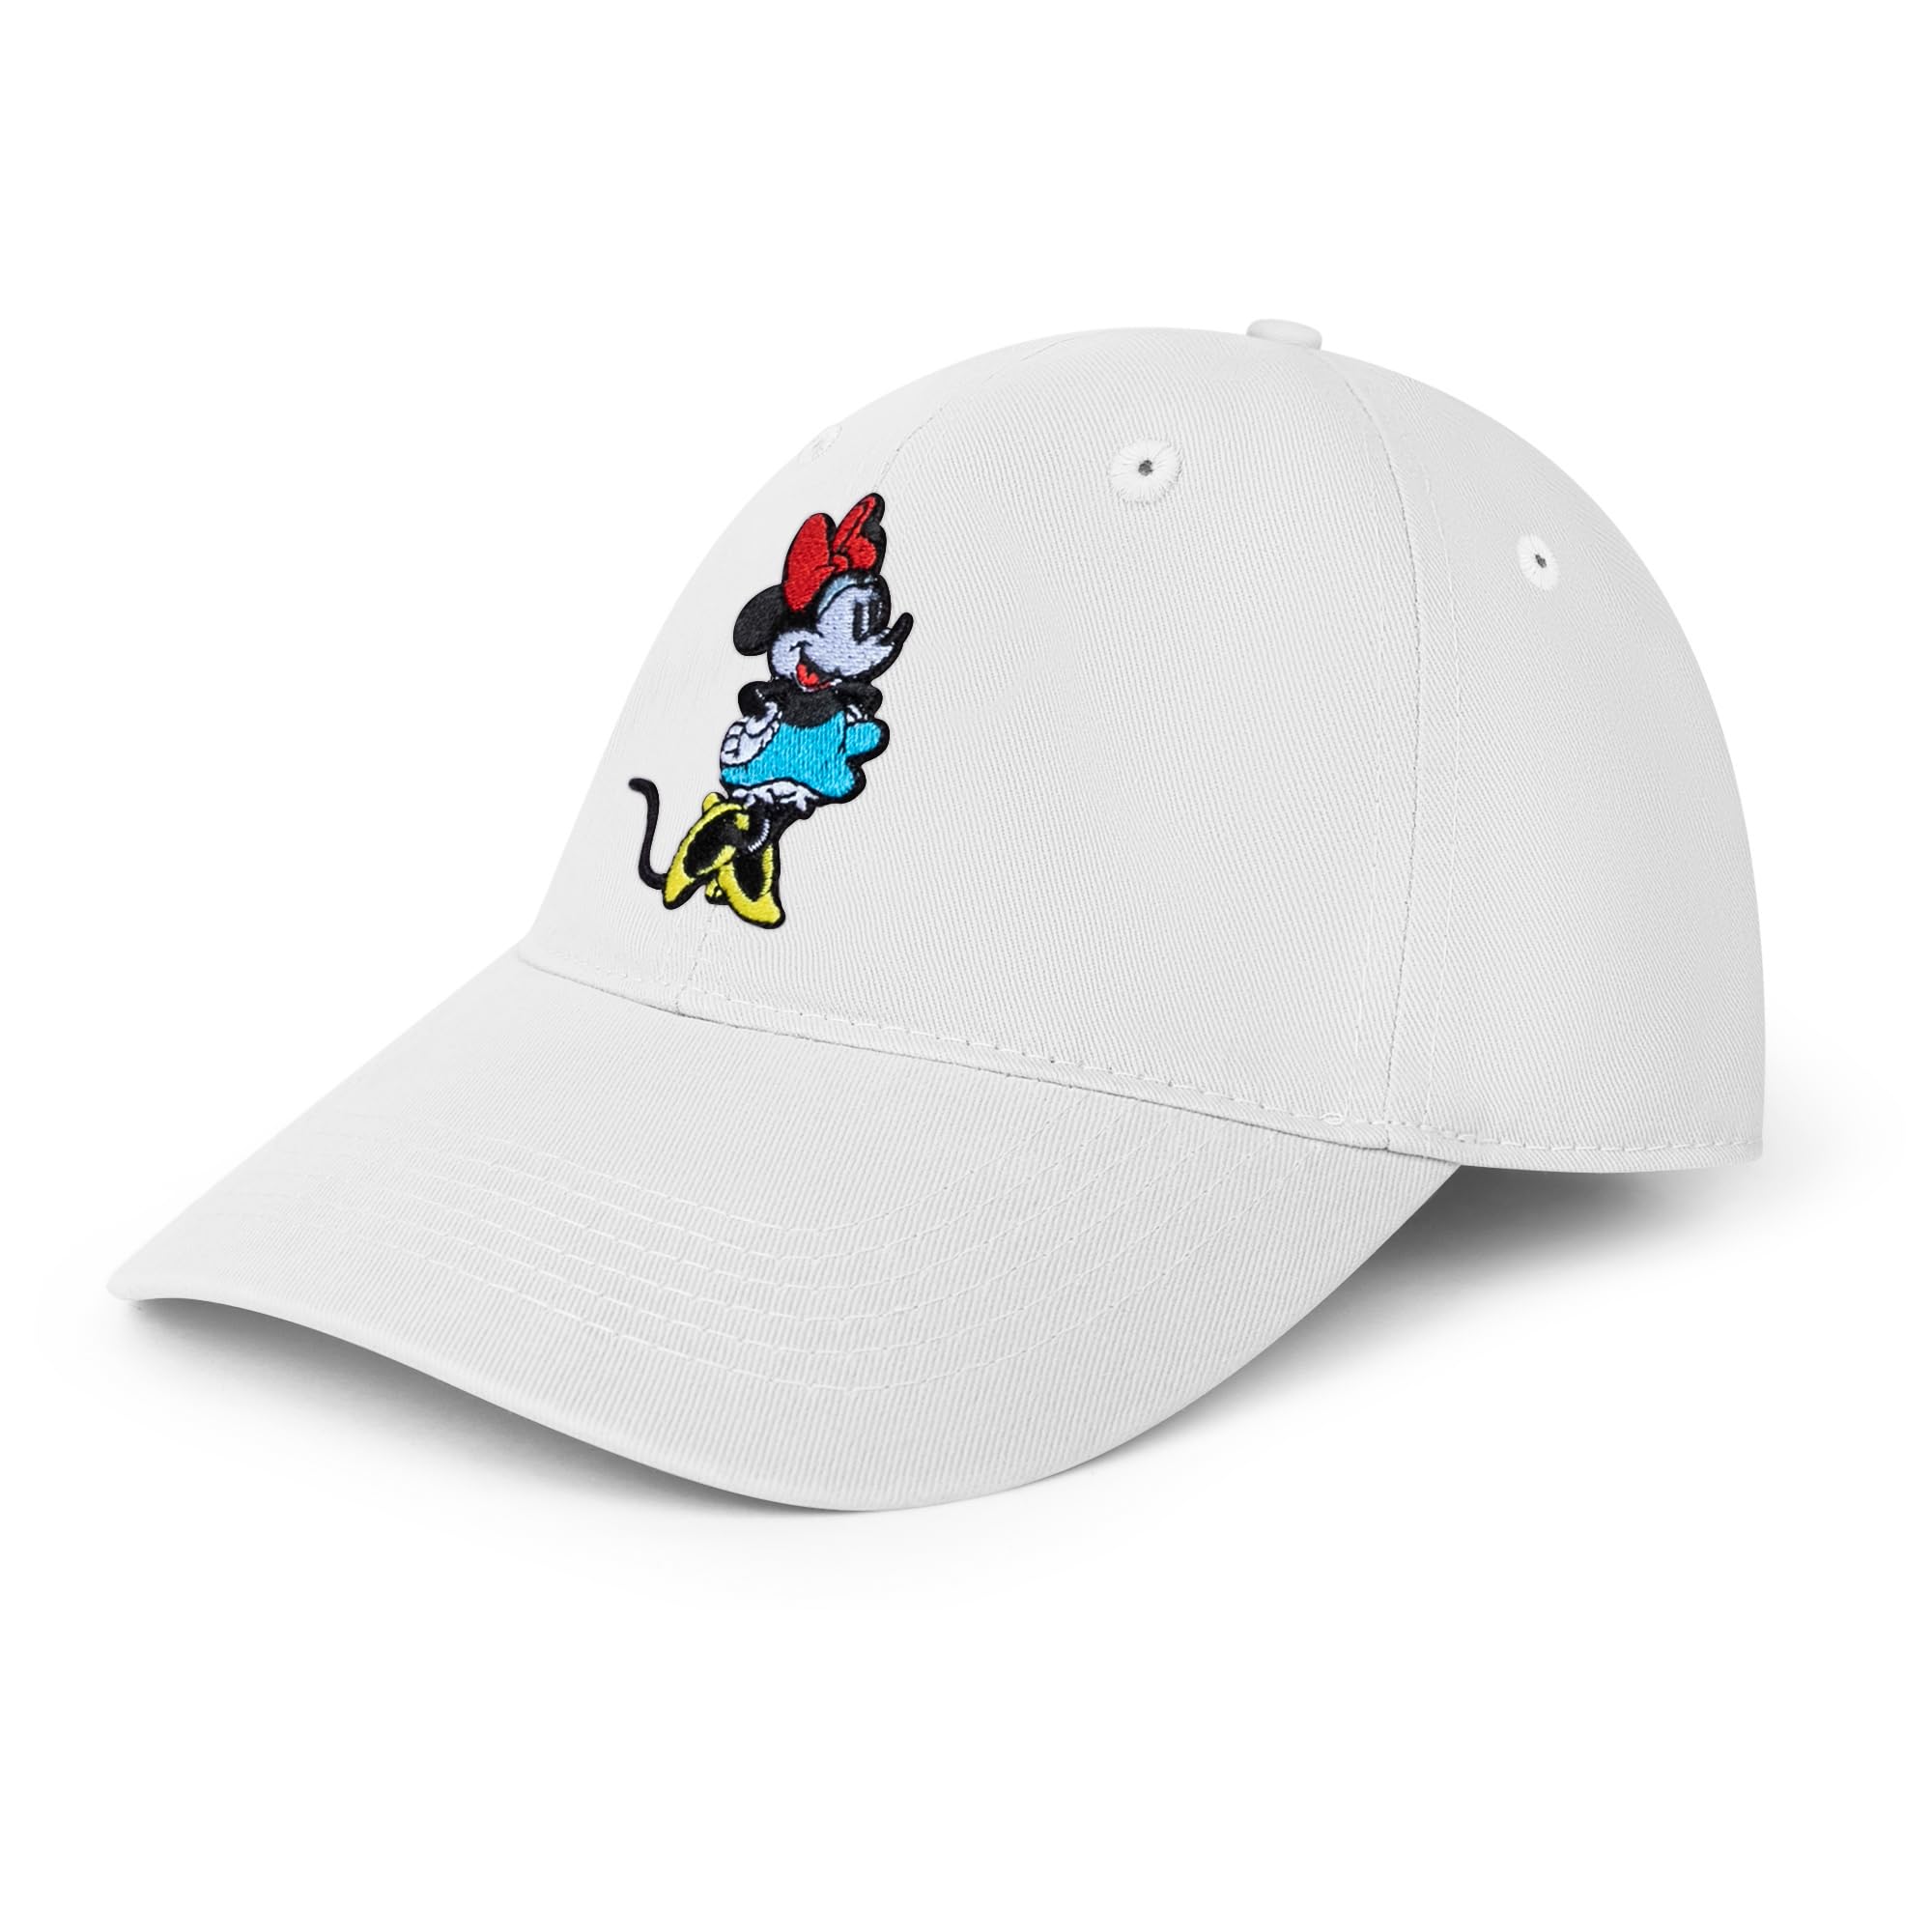 Disney Adult Baseball Cap, Minnie Mouse Adjustable Dad Hat